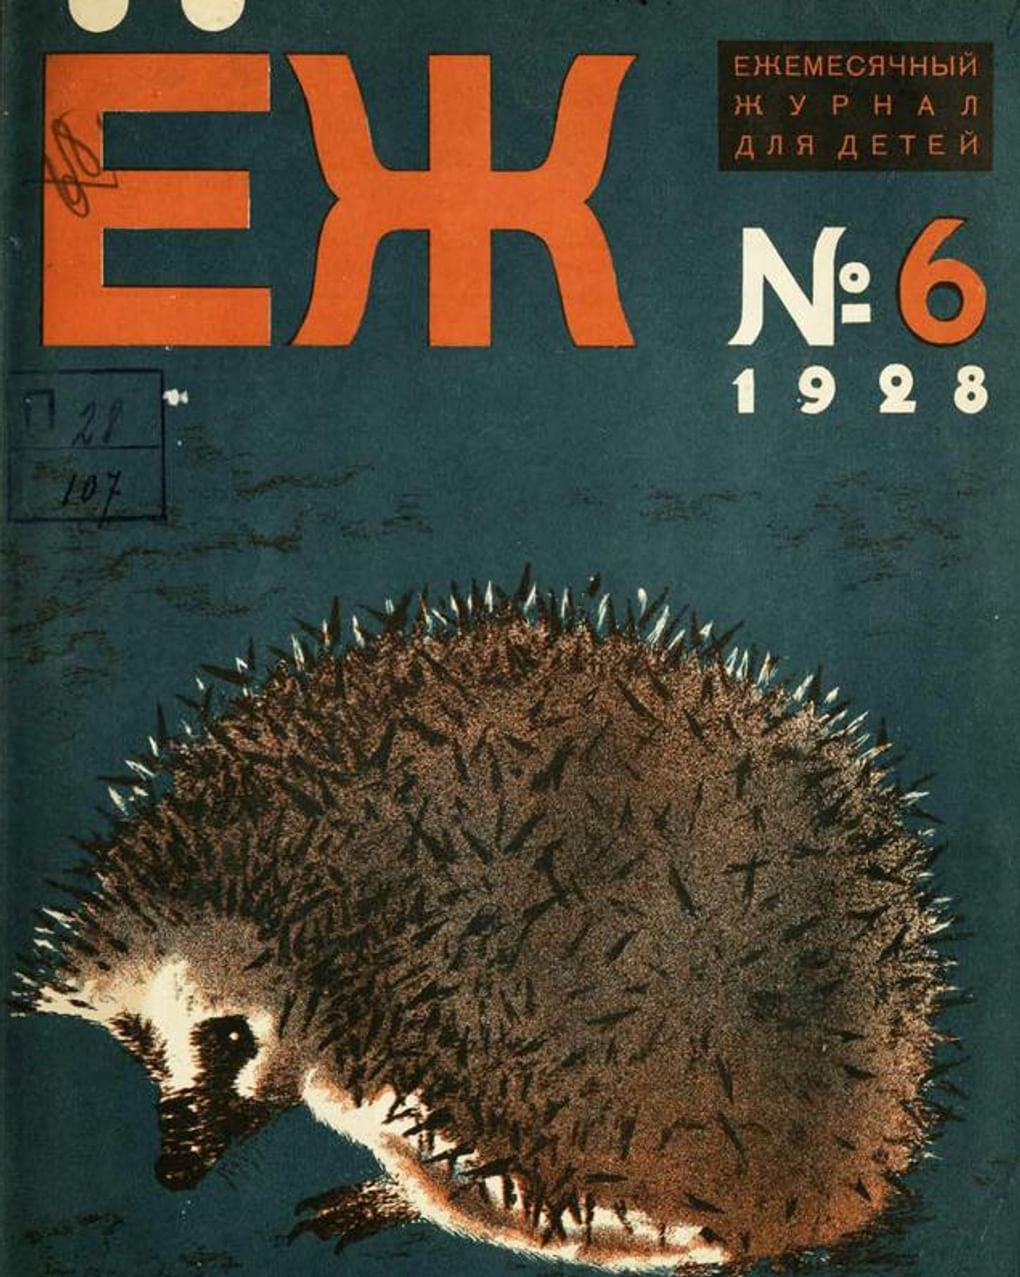 Журнал «Еж» № 6. Ленинград: Госиздат, 1928